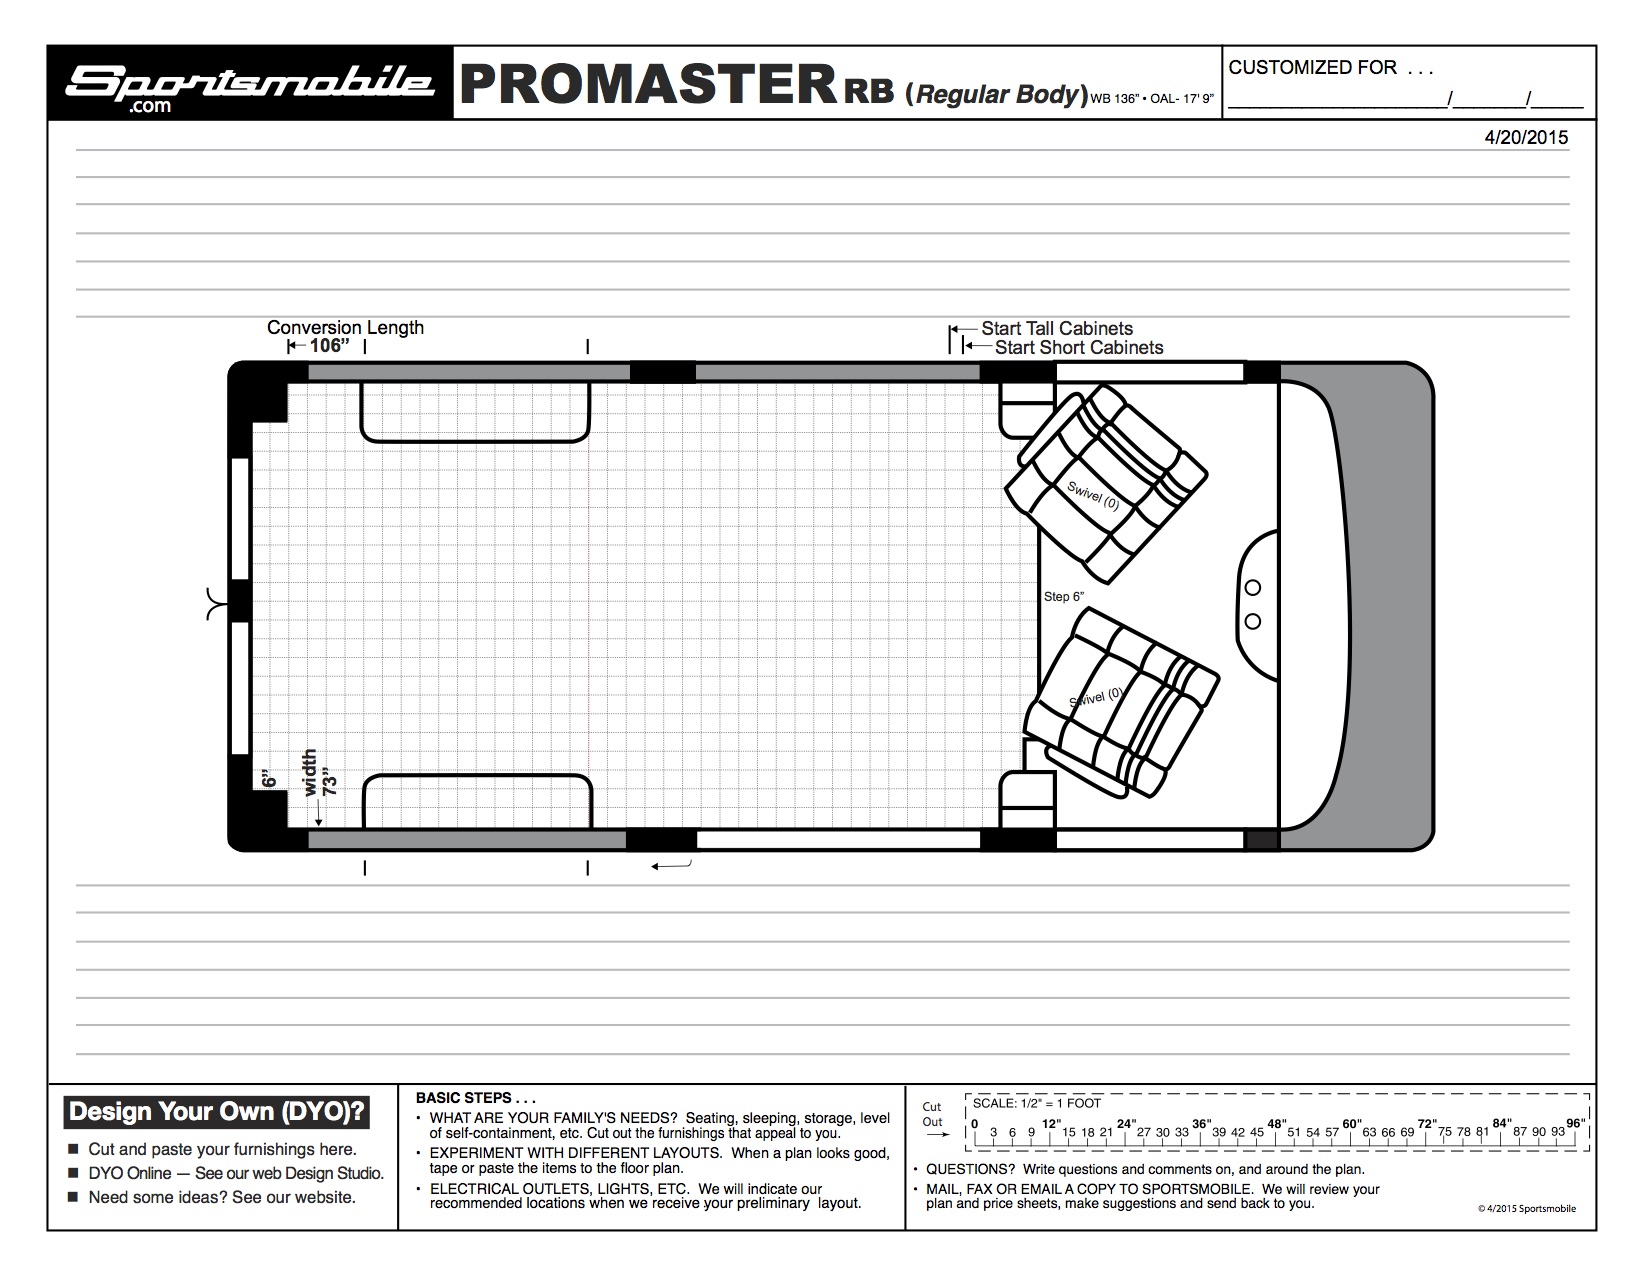 ram-promaster-floor-plan-template